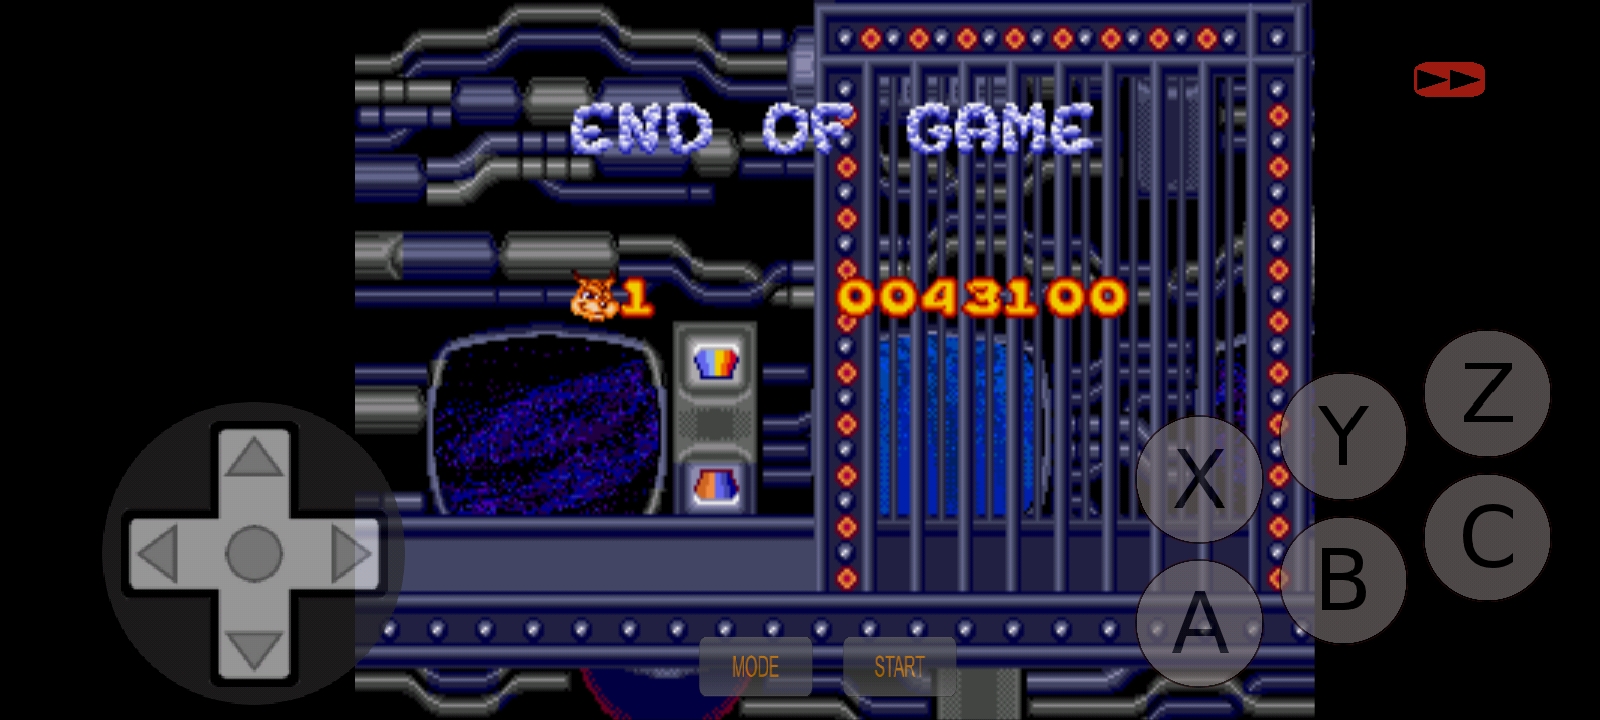 Hauntedprogram: Bubsy II (Sega Genesis / MegaDrive Emulated) 43,100 points on 2022-07-23 09:53:12